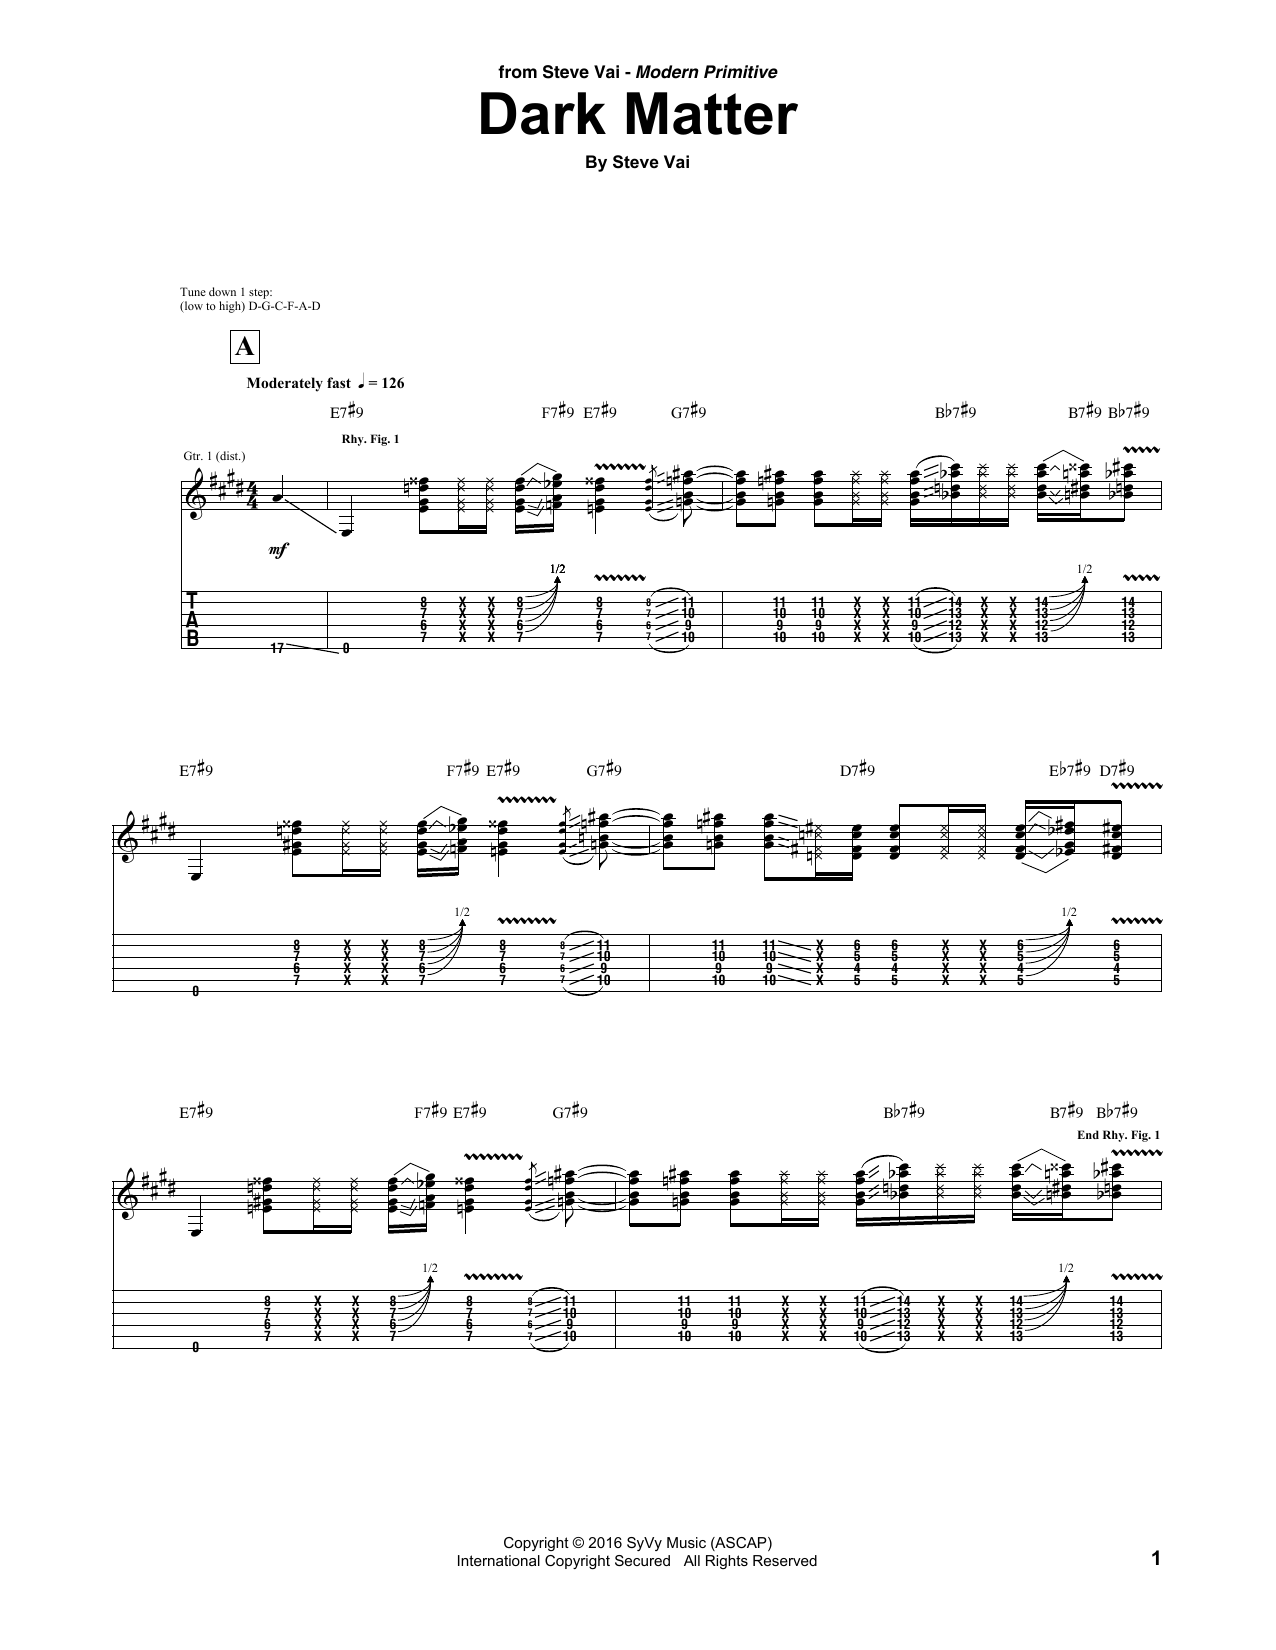 Steve Vai Dark Matter Sheet Music Notes & Chords for Guitar Tab - Download or Print PDF